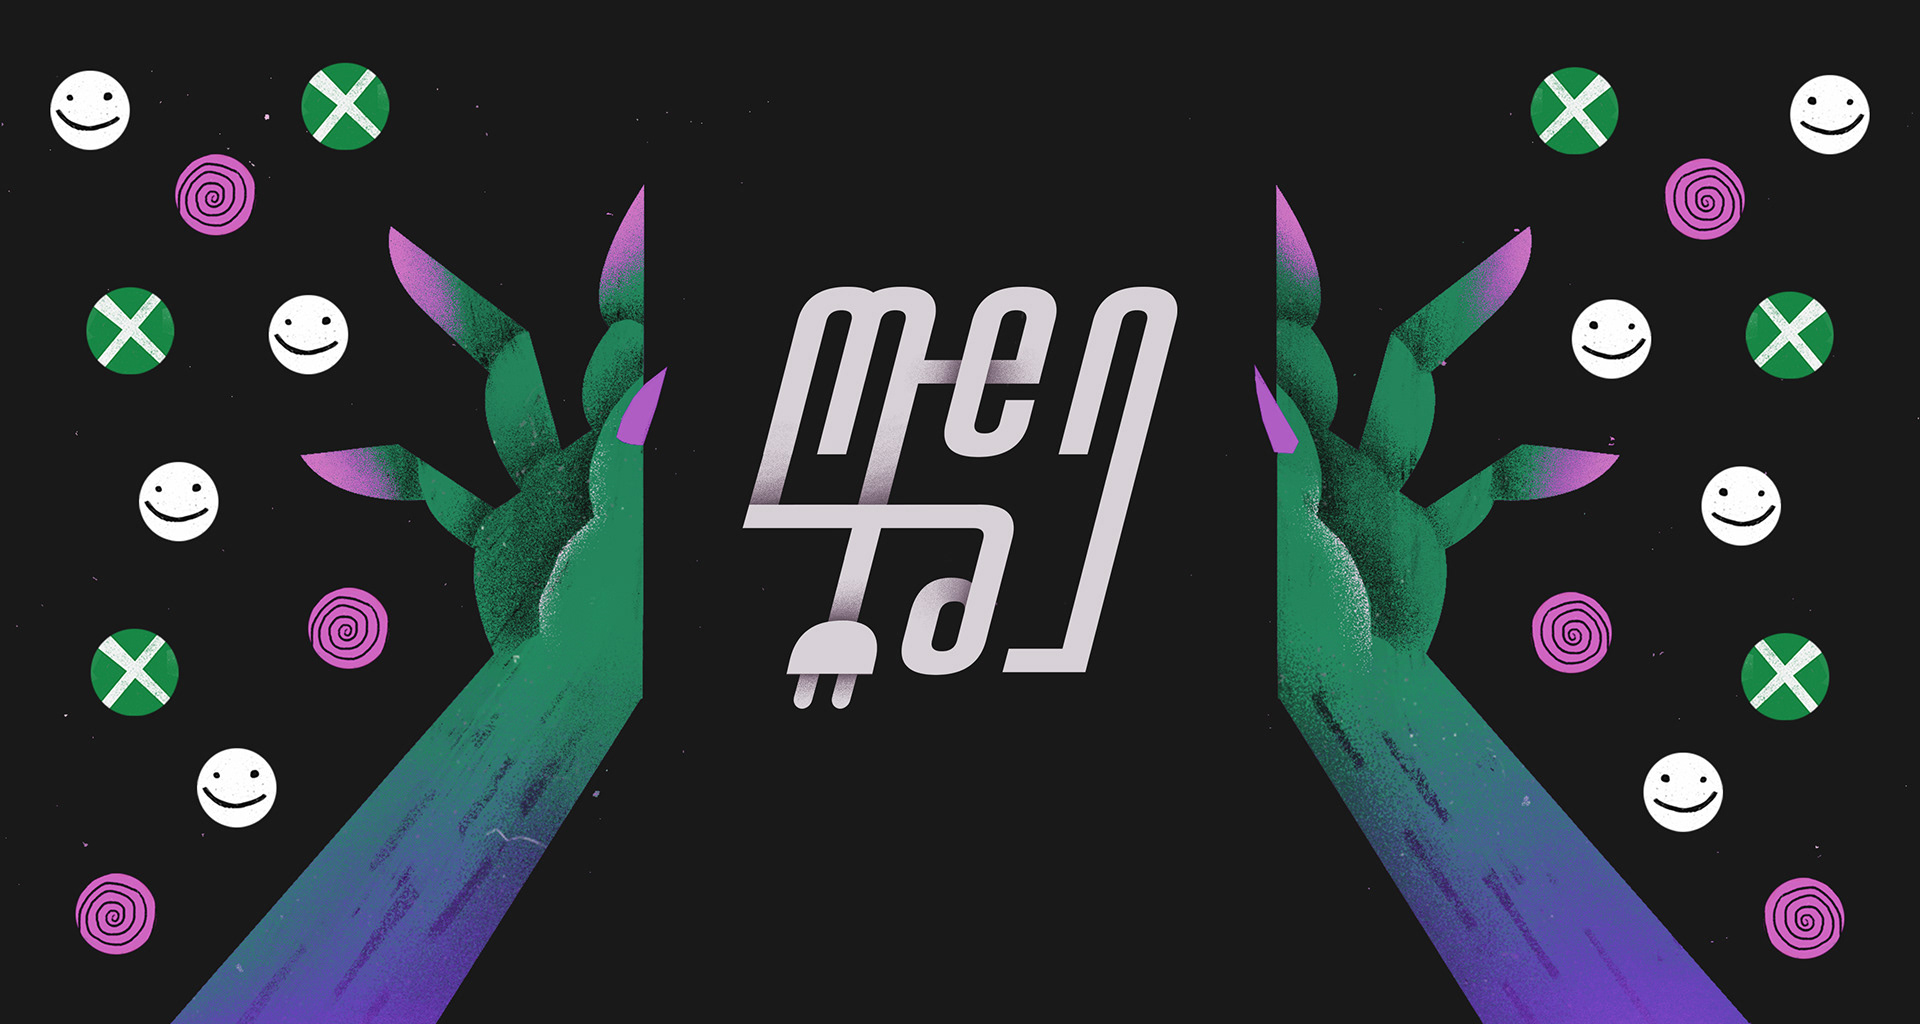 MENTAL - electronic music festival concept